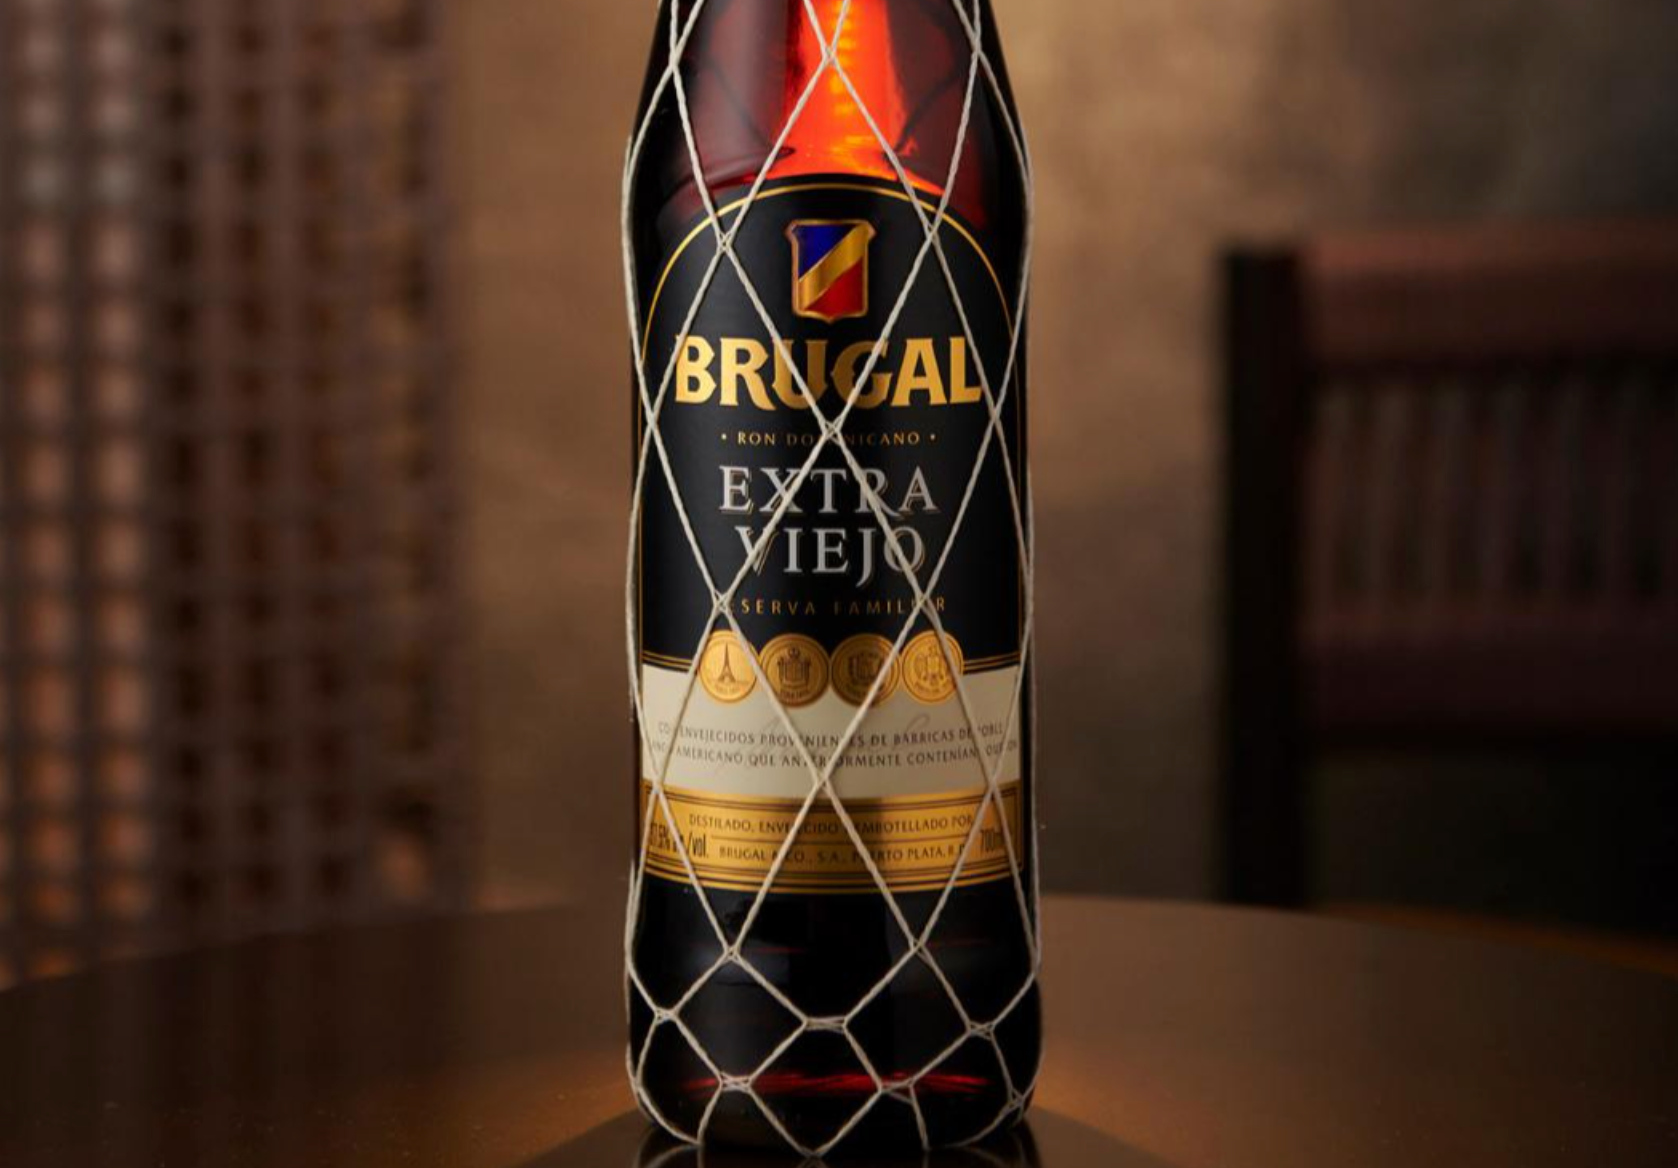 Brugal Extra Viejo Gold Rum